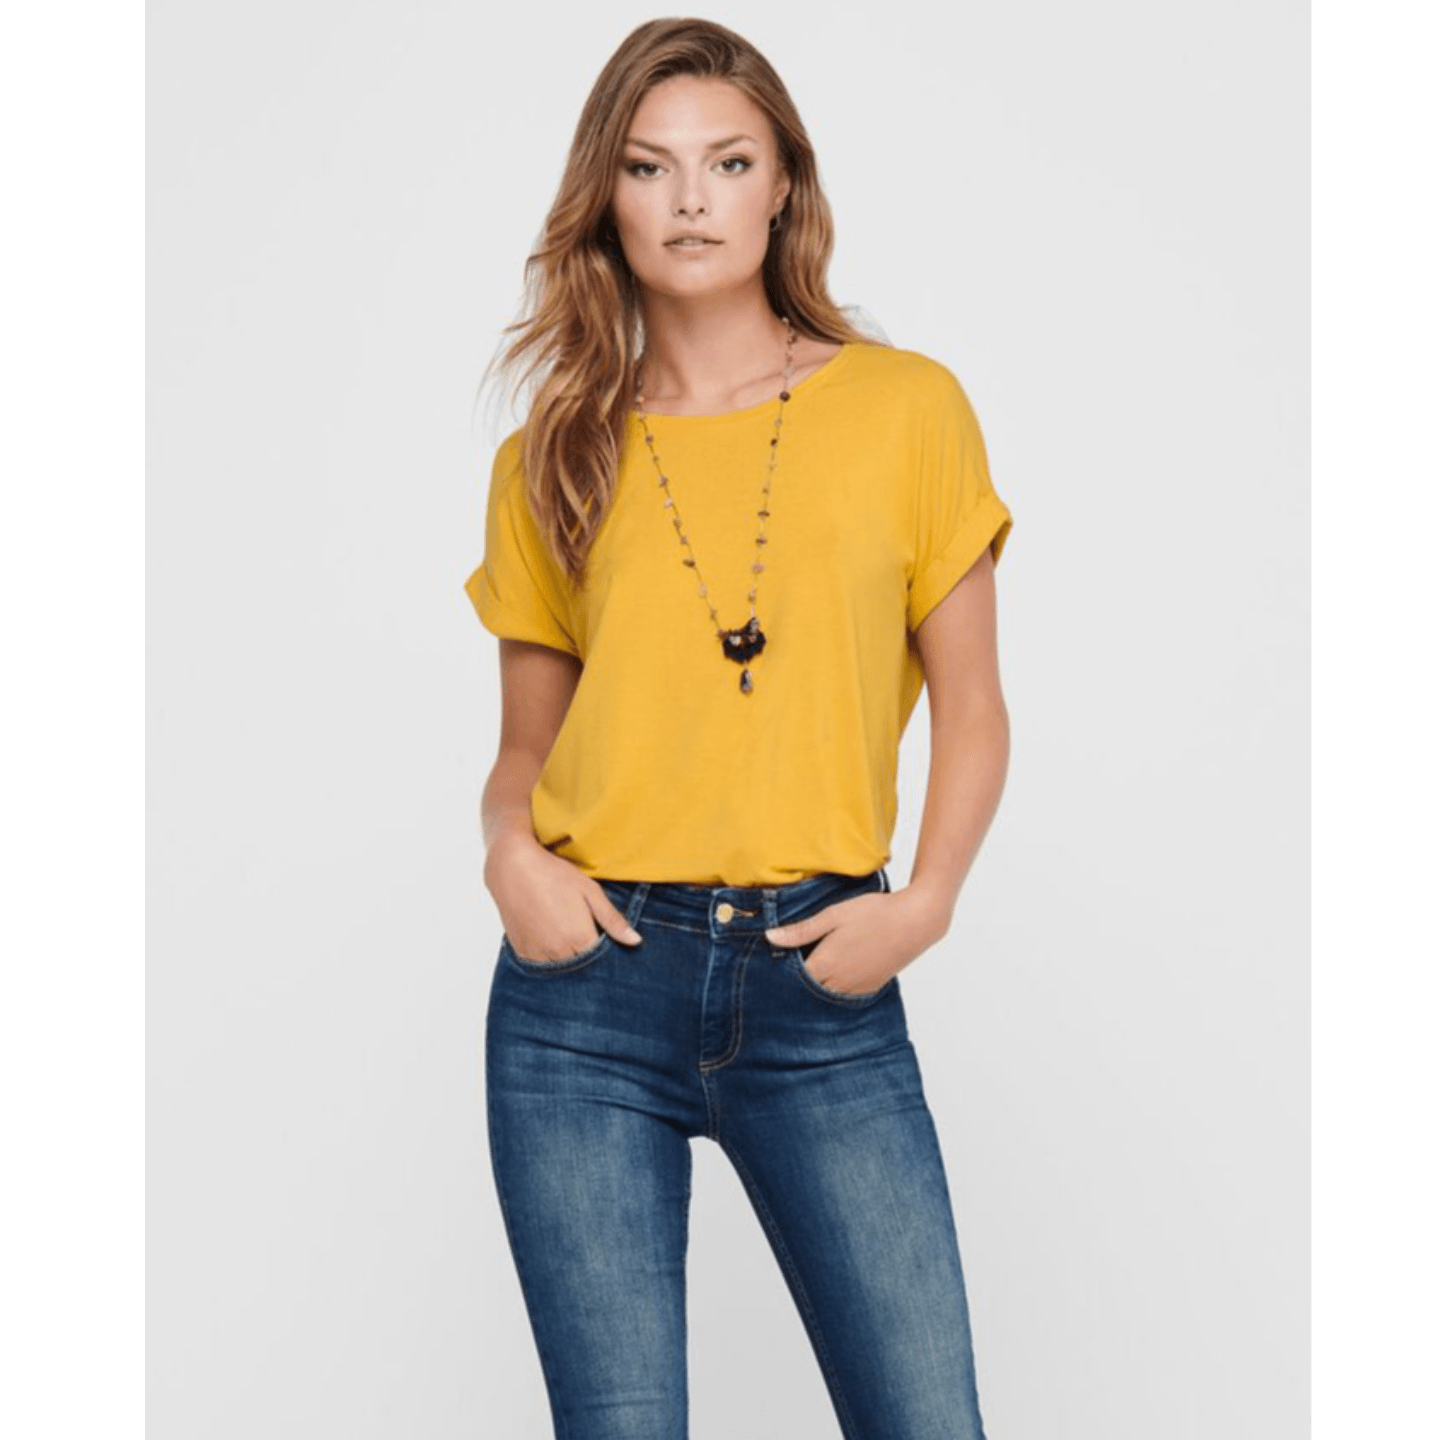 Solid Mustard Yellow Boyfriend Fit T-Shirt for Women